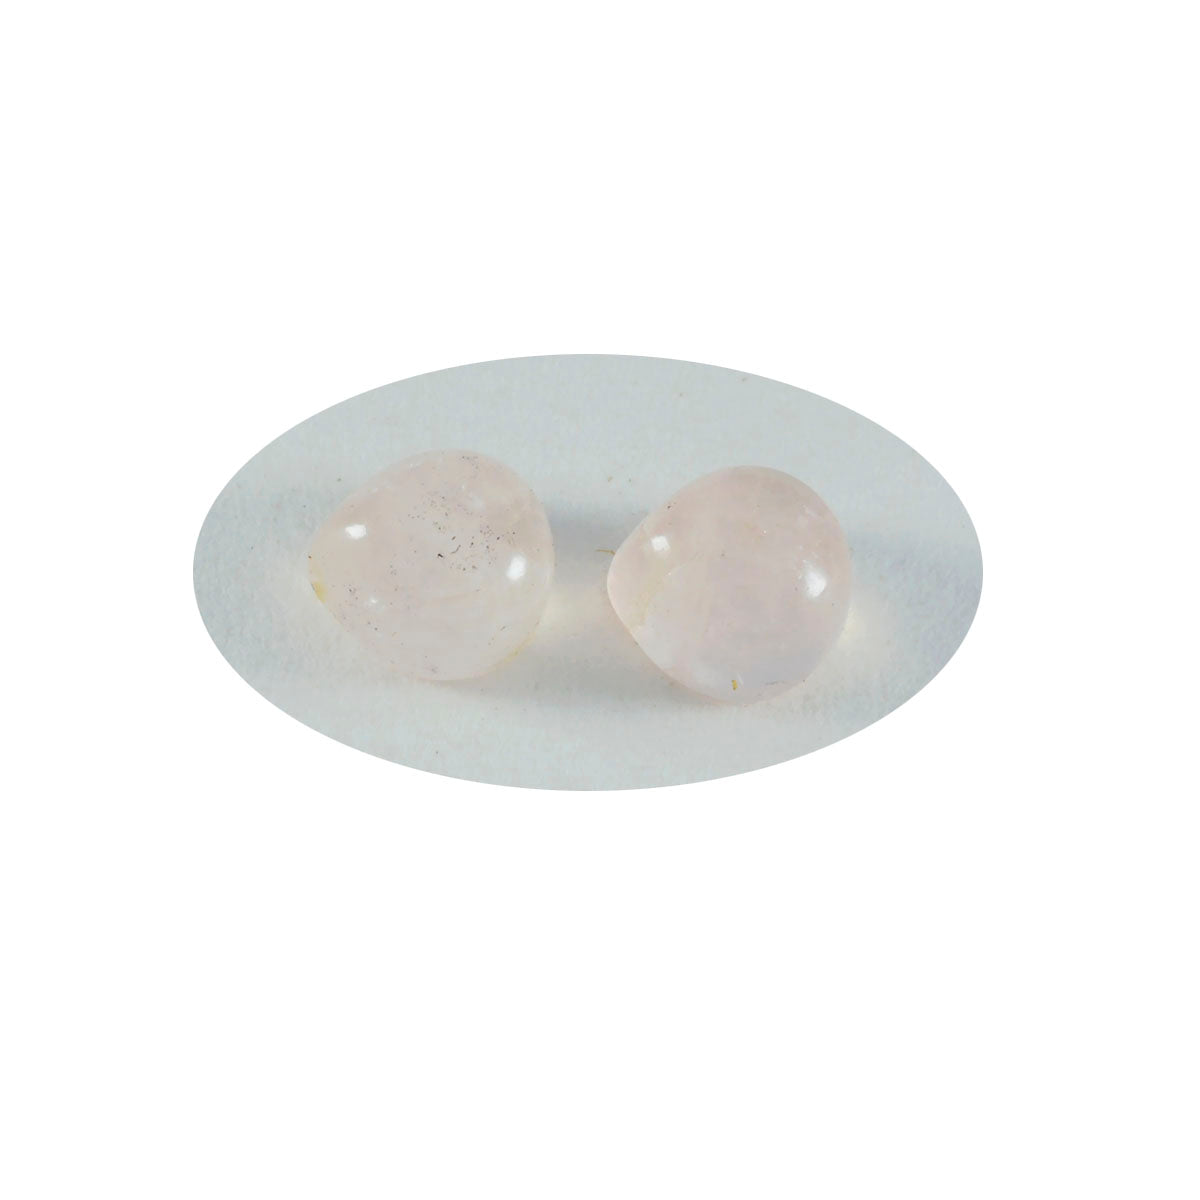 Riyogems 1PC roze rozenkwarts cabochon 5x5 mm hartvorm uitstekende kwaliteit losse steen